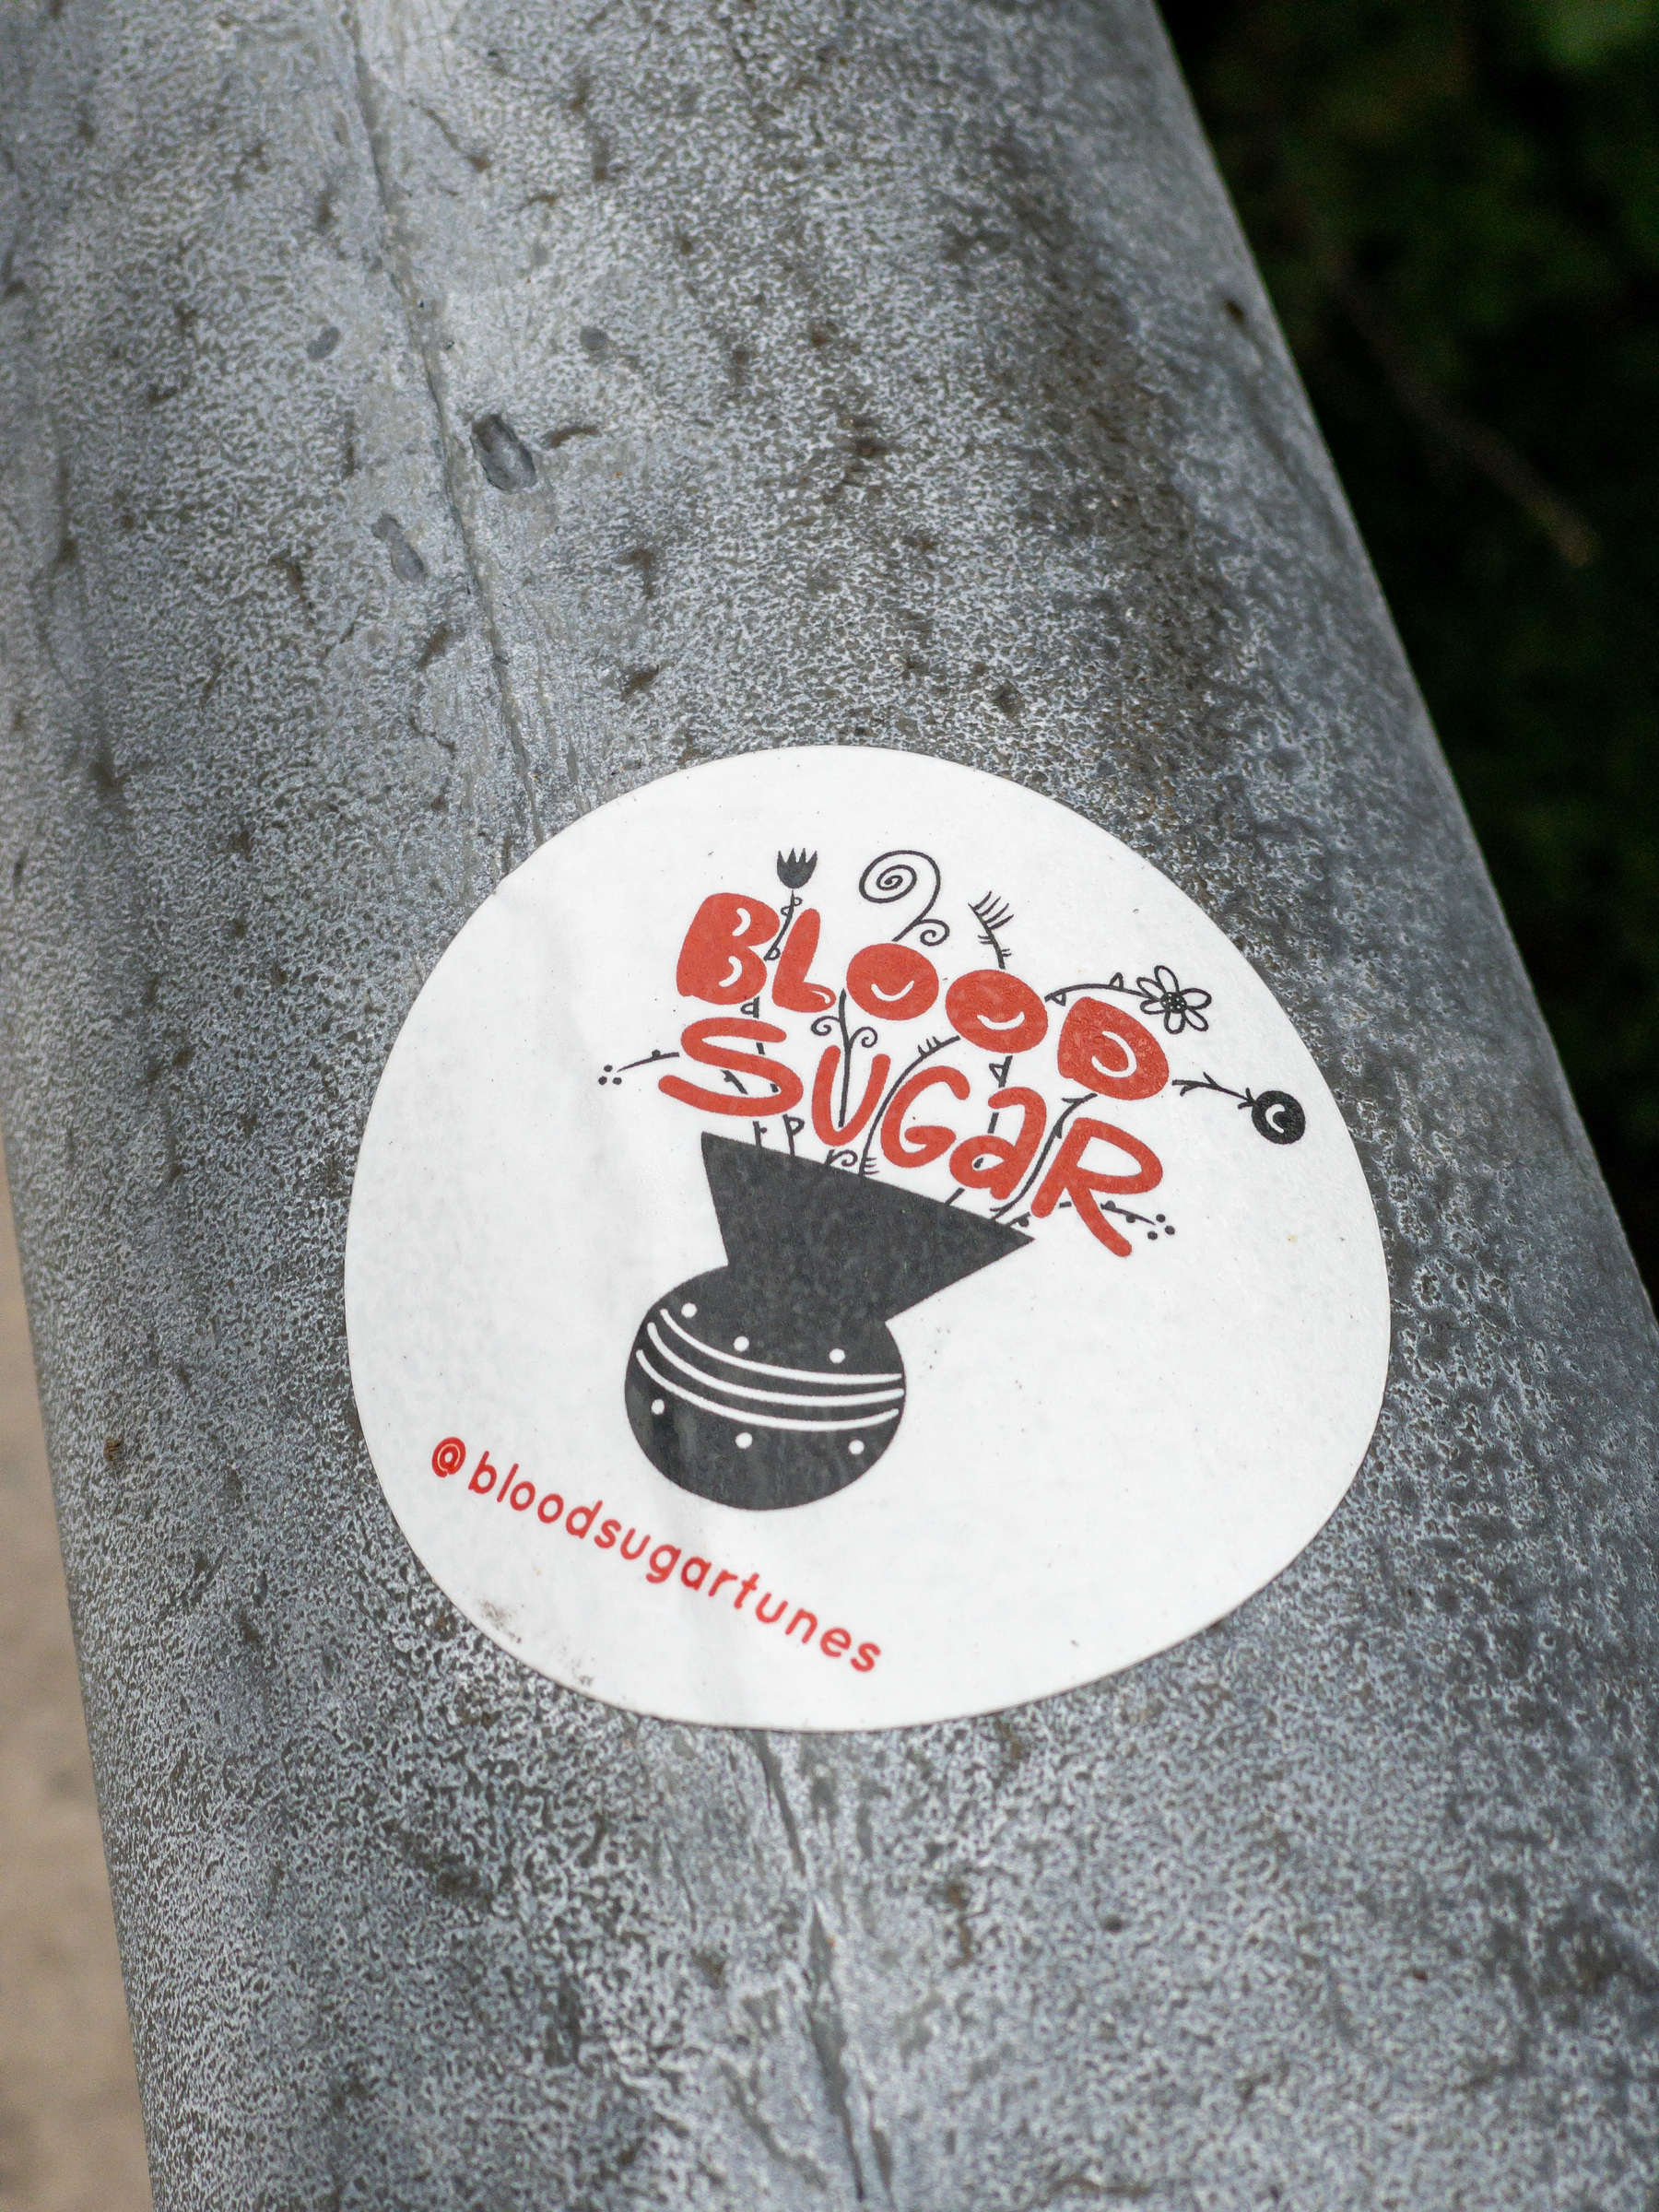 Circular sticker for Blood Sugar Tunes on metal rail.